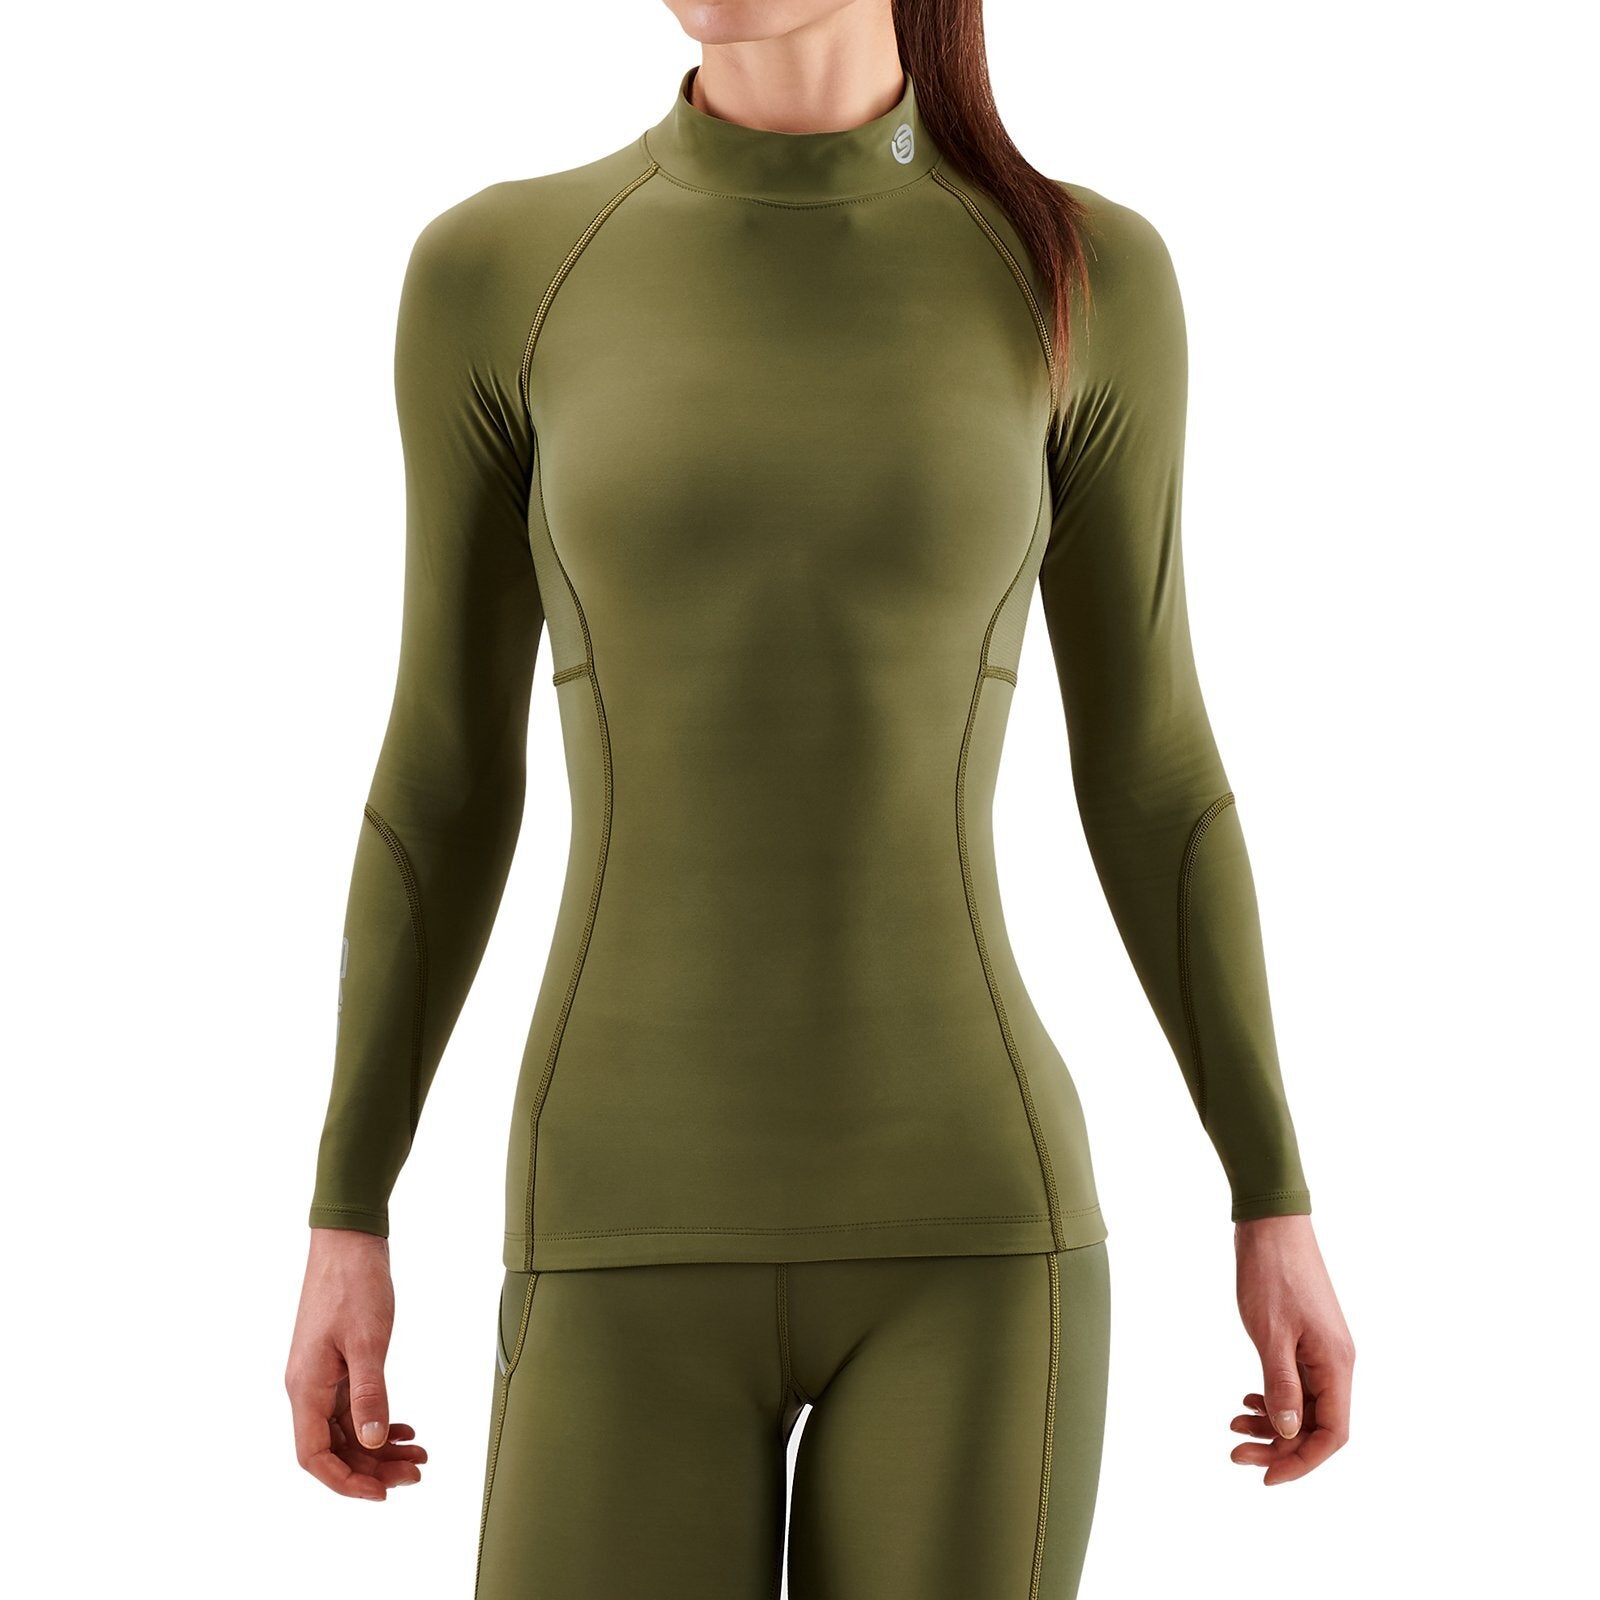 SKINS SERIES-3 Women's Thermal Long Sleeve Top Khaki